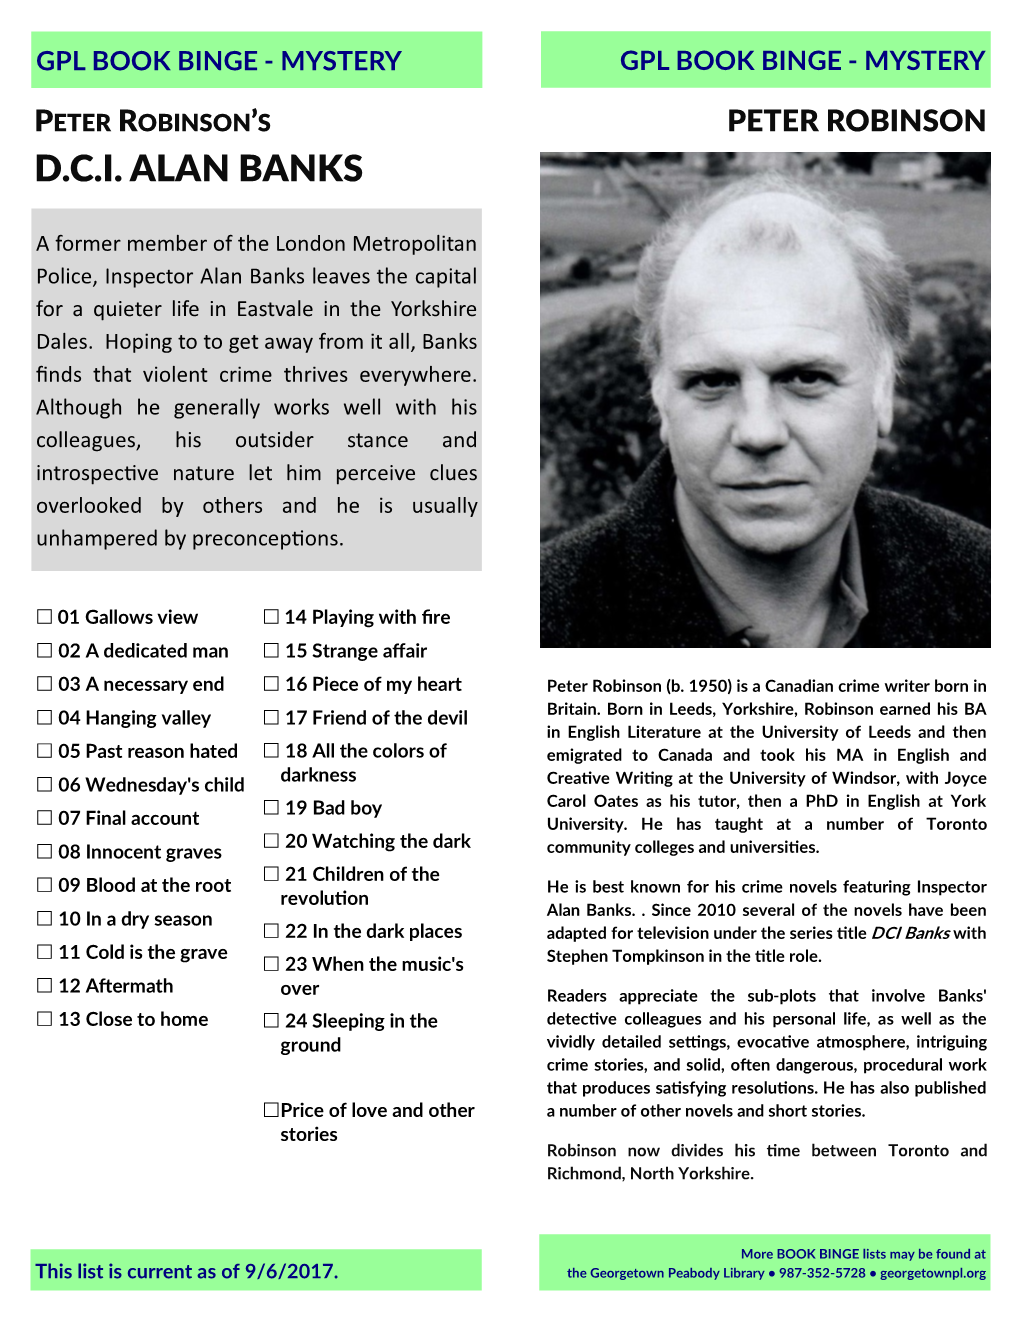 D.C.I. Alan Banks